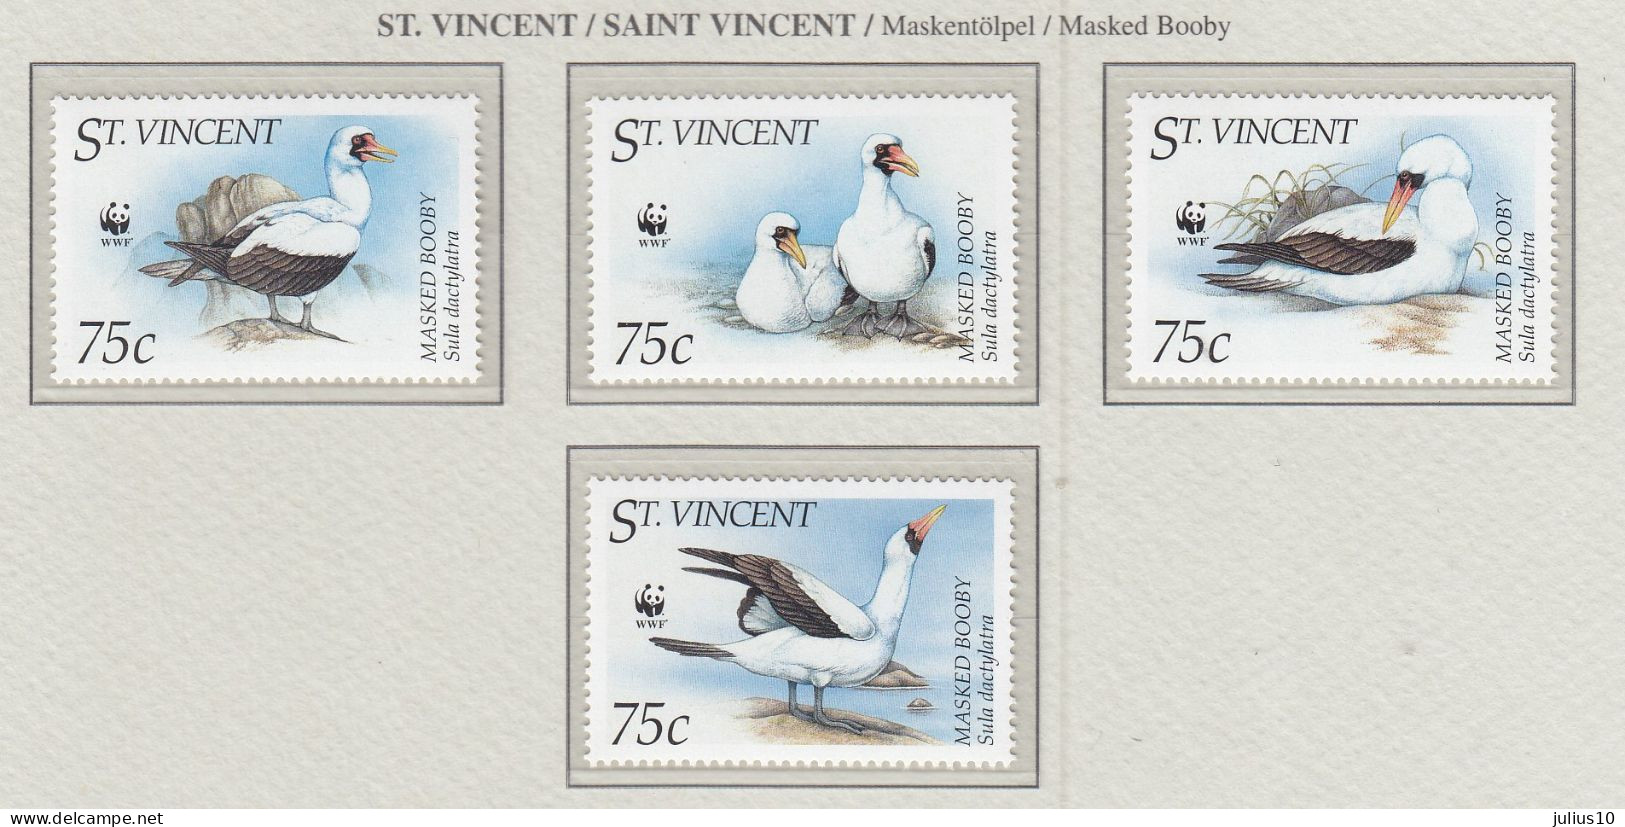 St. VINCENT 1995 WWF Masked Booby Birds Mi 3073 - 3076 MNH(**) Fauna 534 - Marine Web-footed Birds